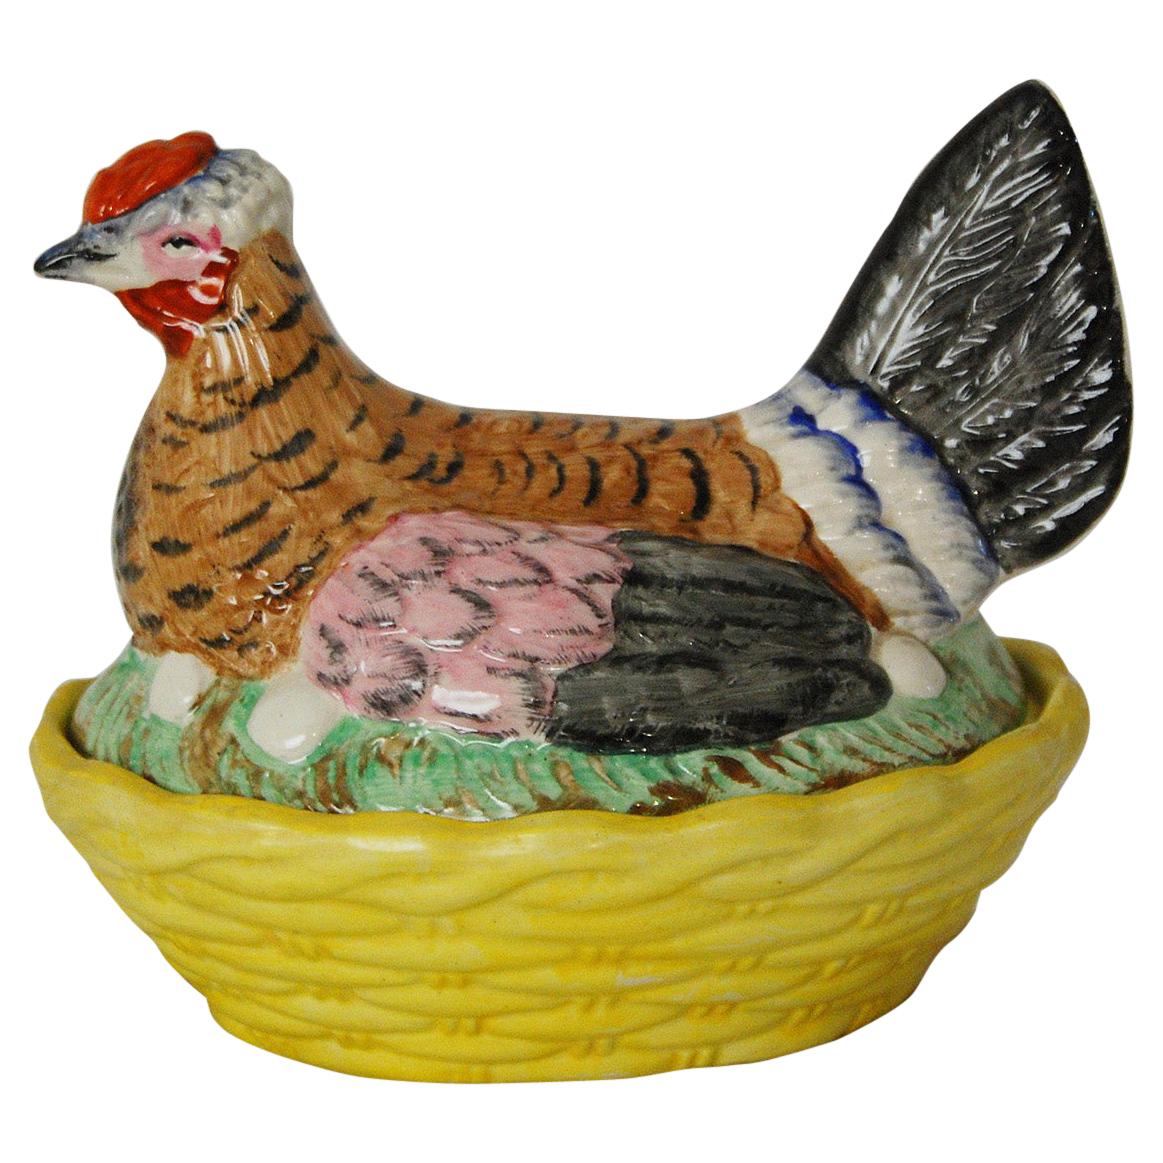 English Mid 19th Century Staffordshire Ironstone Chicken on a Yellow Basket